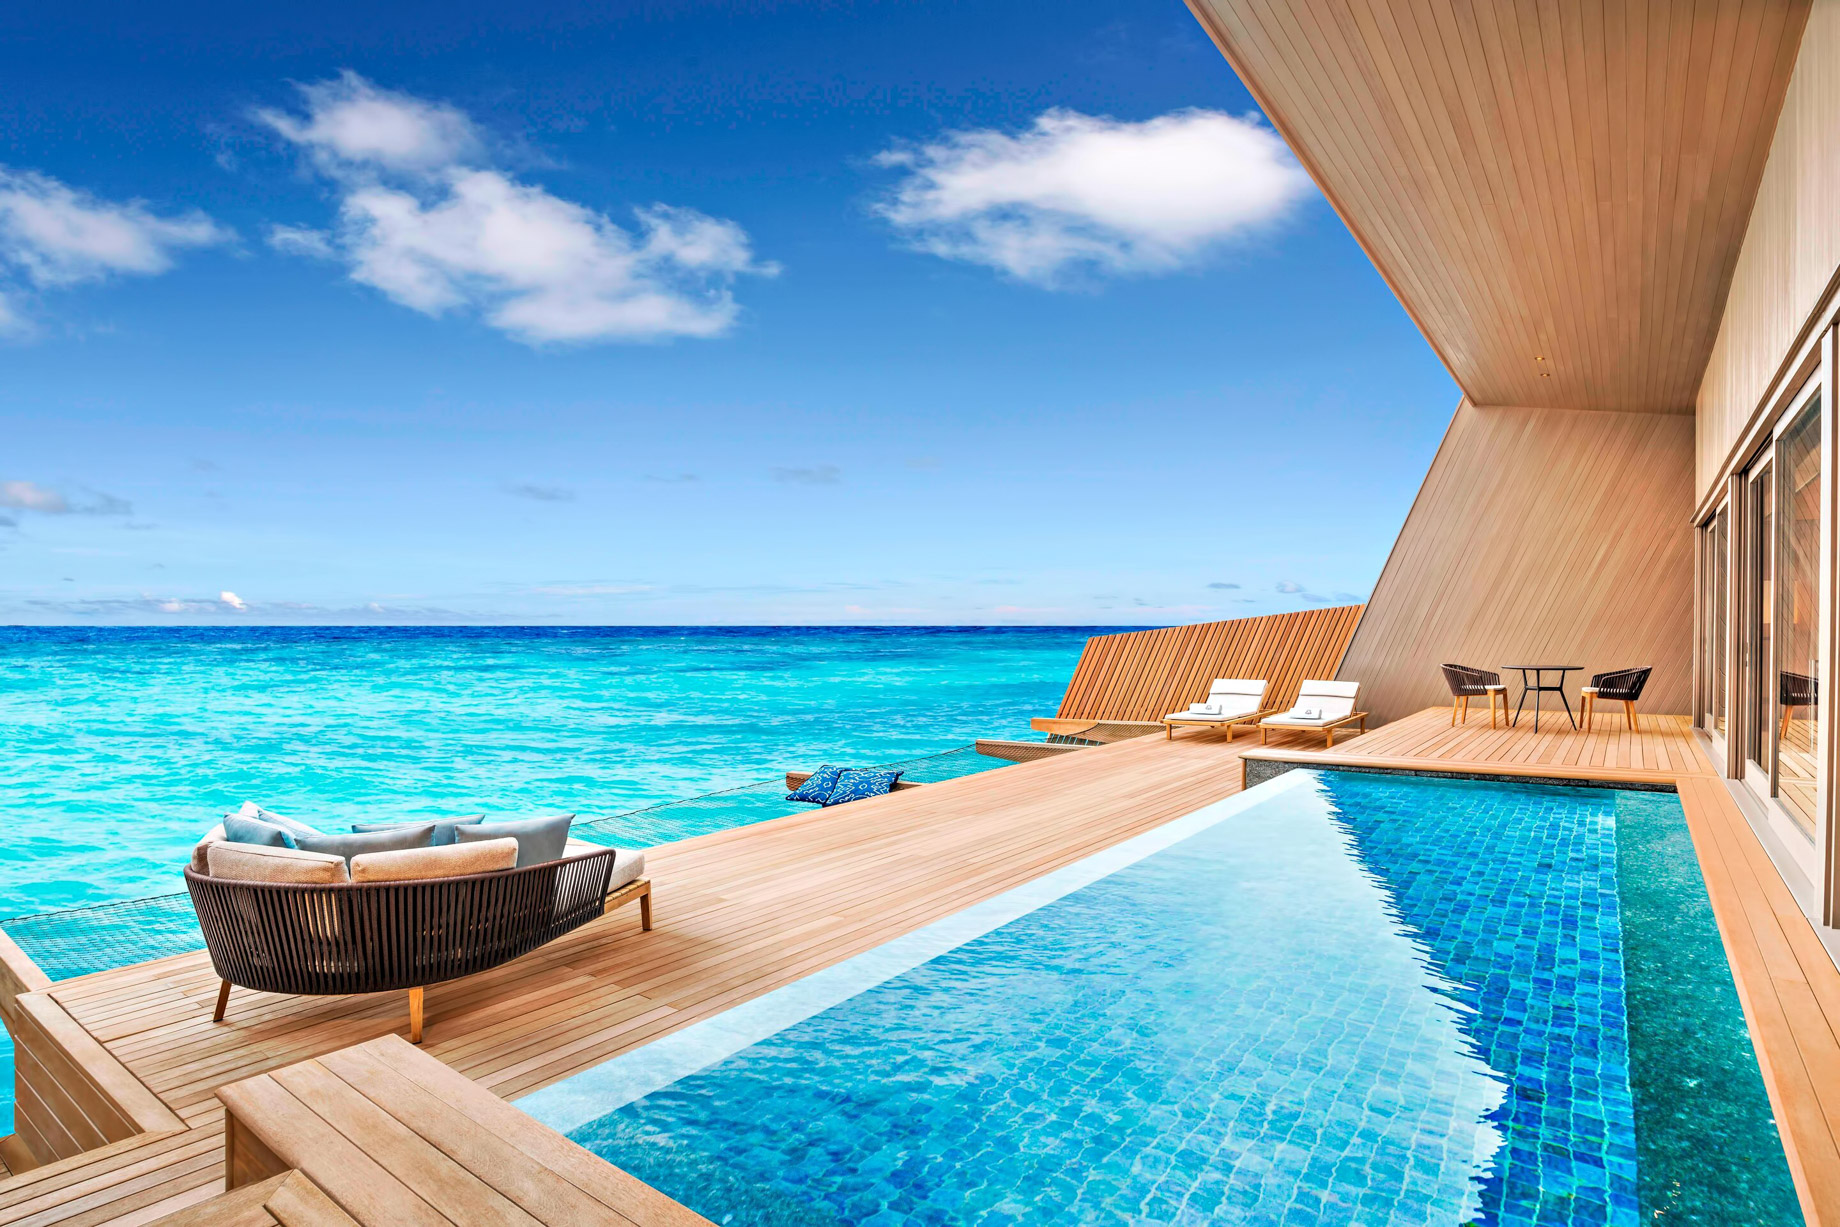 The St. Regis Maldives Vommuli Resort – Dhaalu Atoll, Maldives – Overwater Villa with Pool